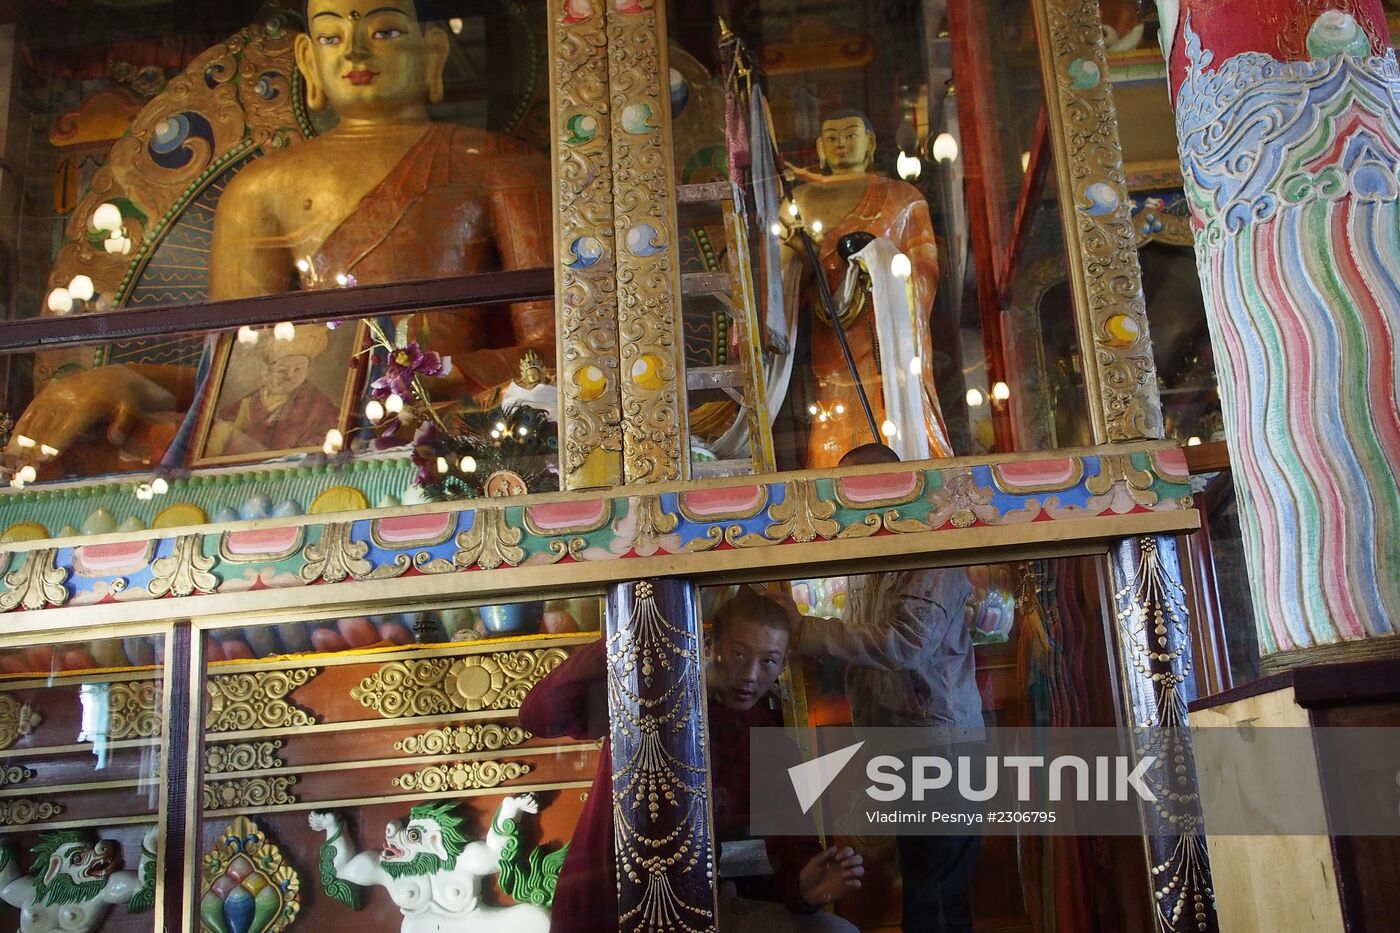 Ivolgin Buddhist Monastery in Buryatia